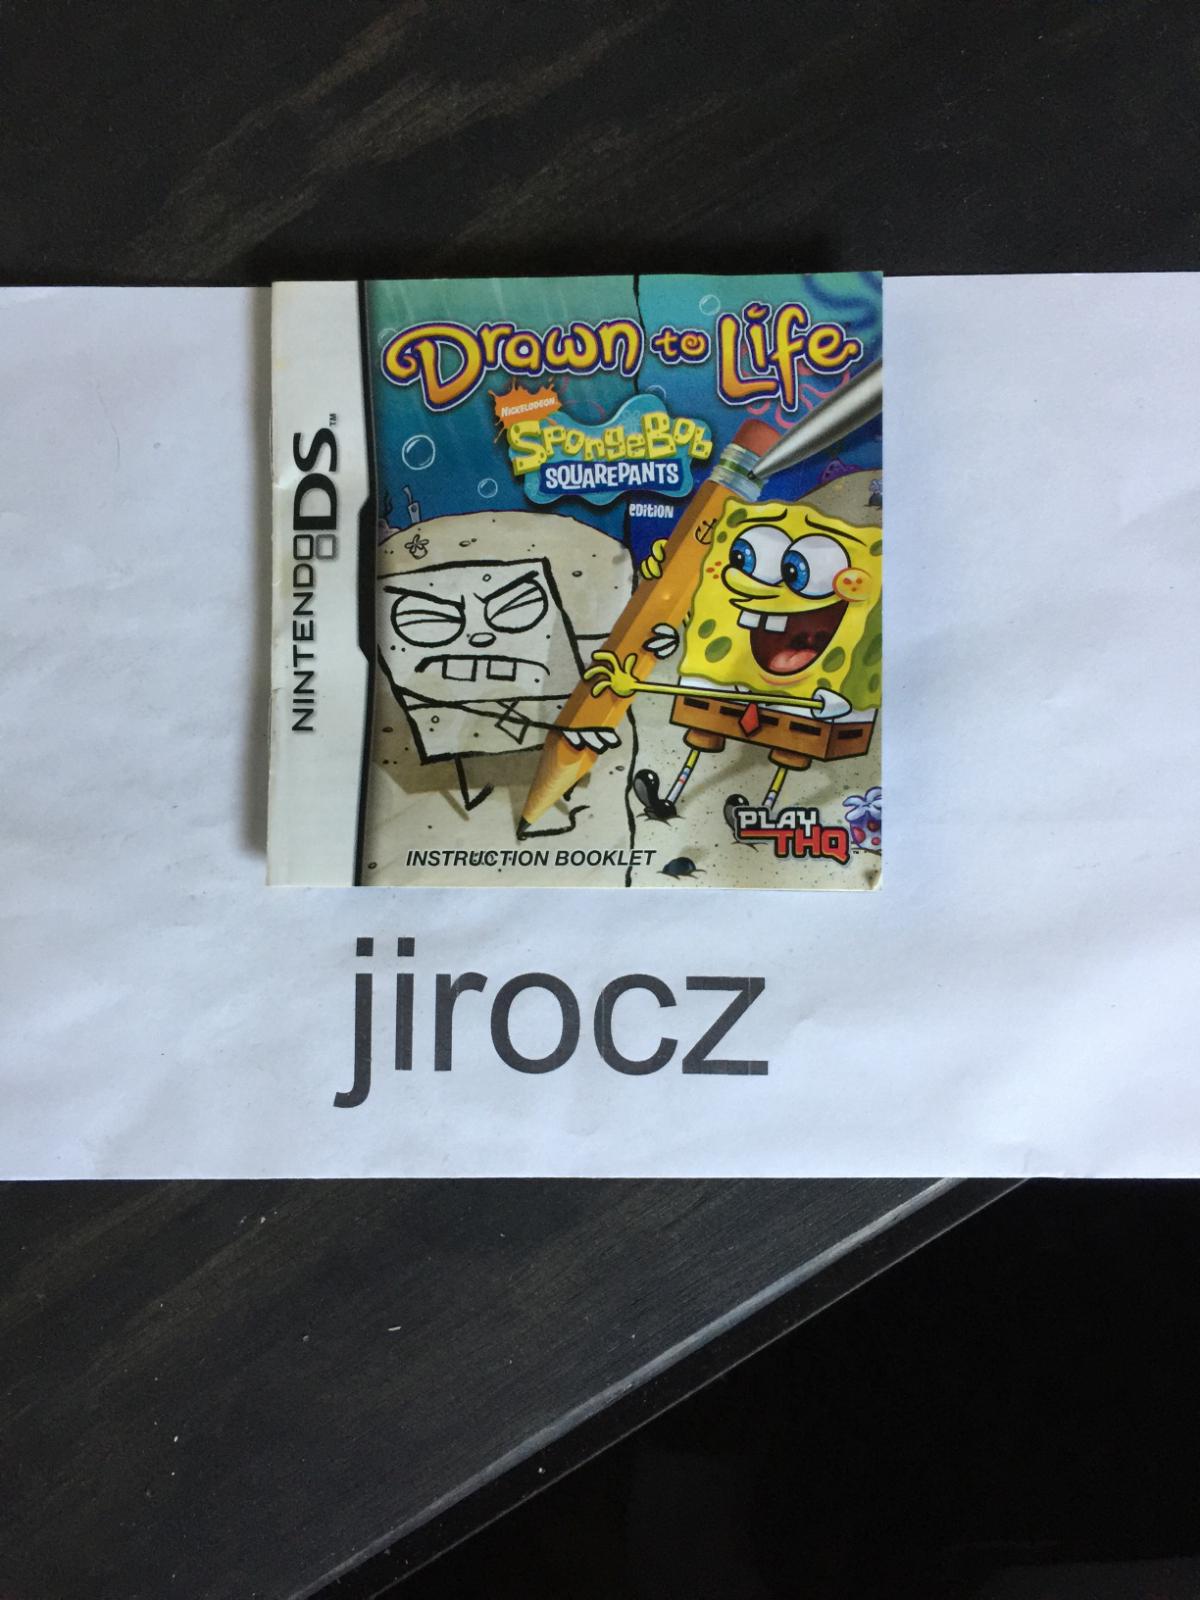 Drawn To Life Spongebob Squarepants Edition Nintendo DS Game 